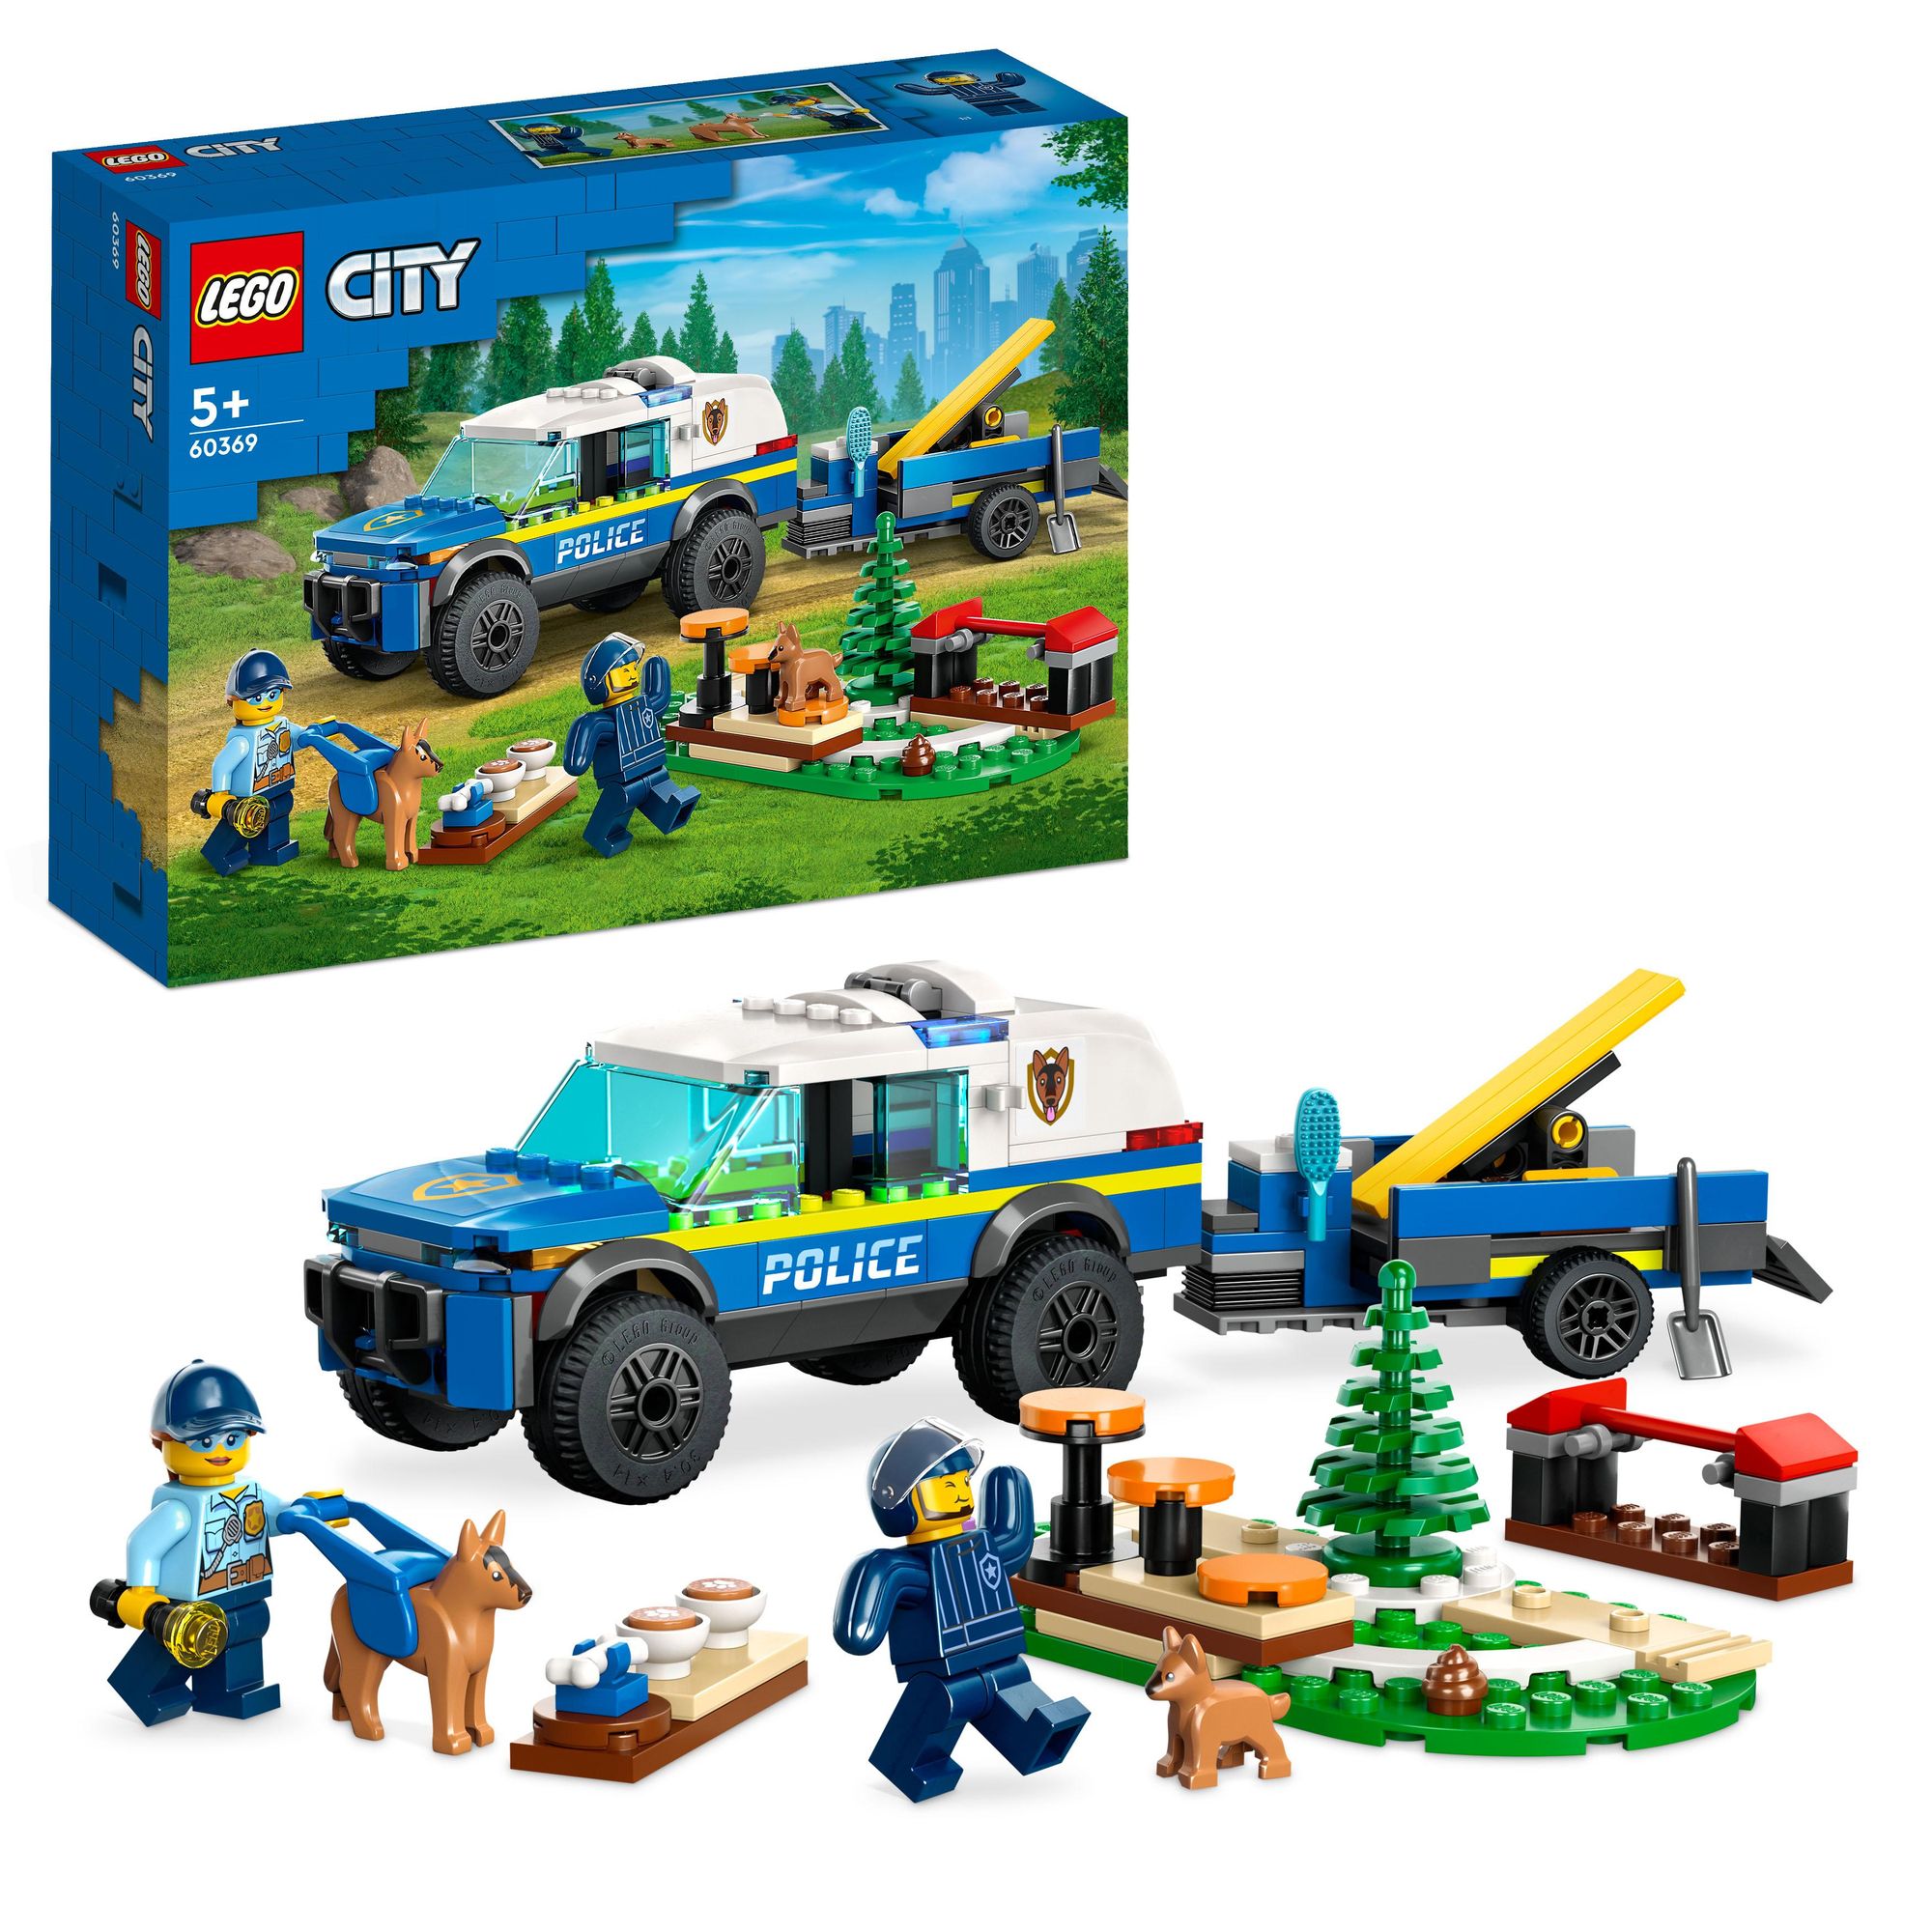 LEGO City 60369 Mobiles Polizeihunde-Training, Spielwaren kaufen - Spielzeug-Auto